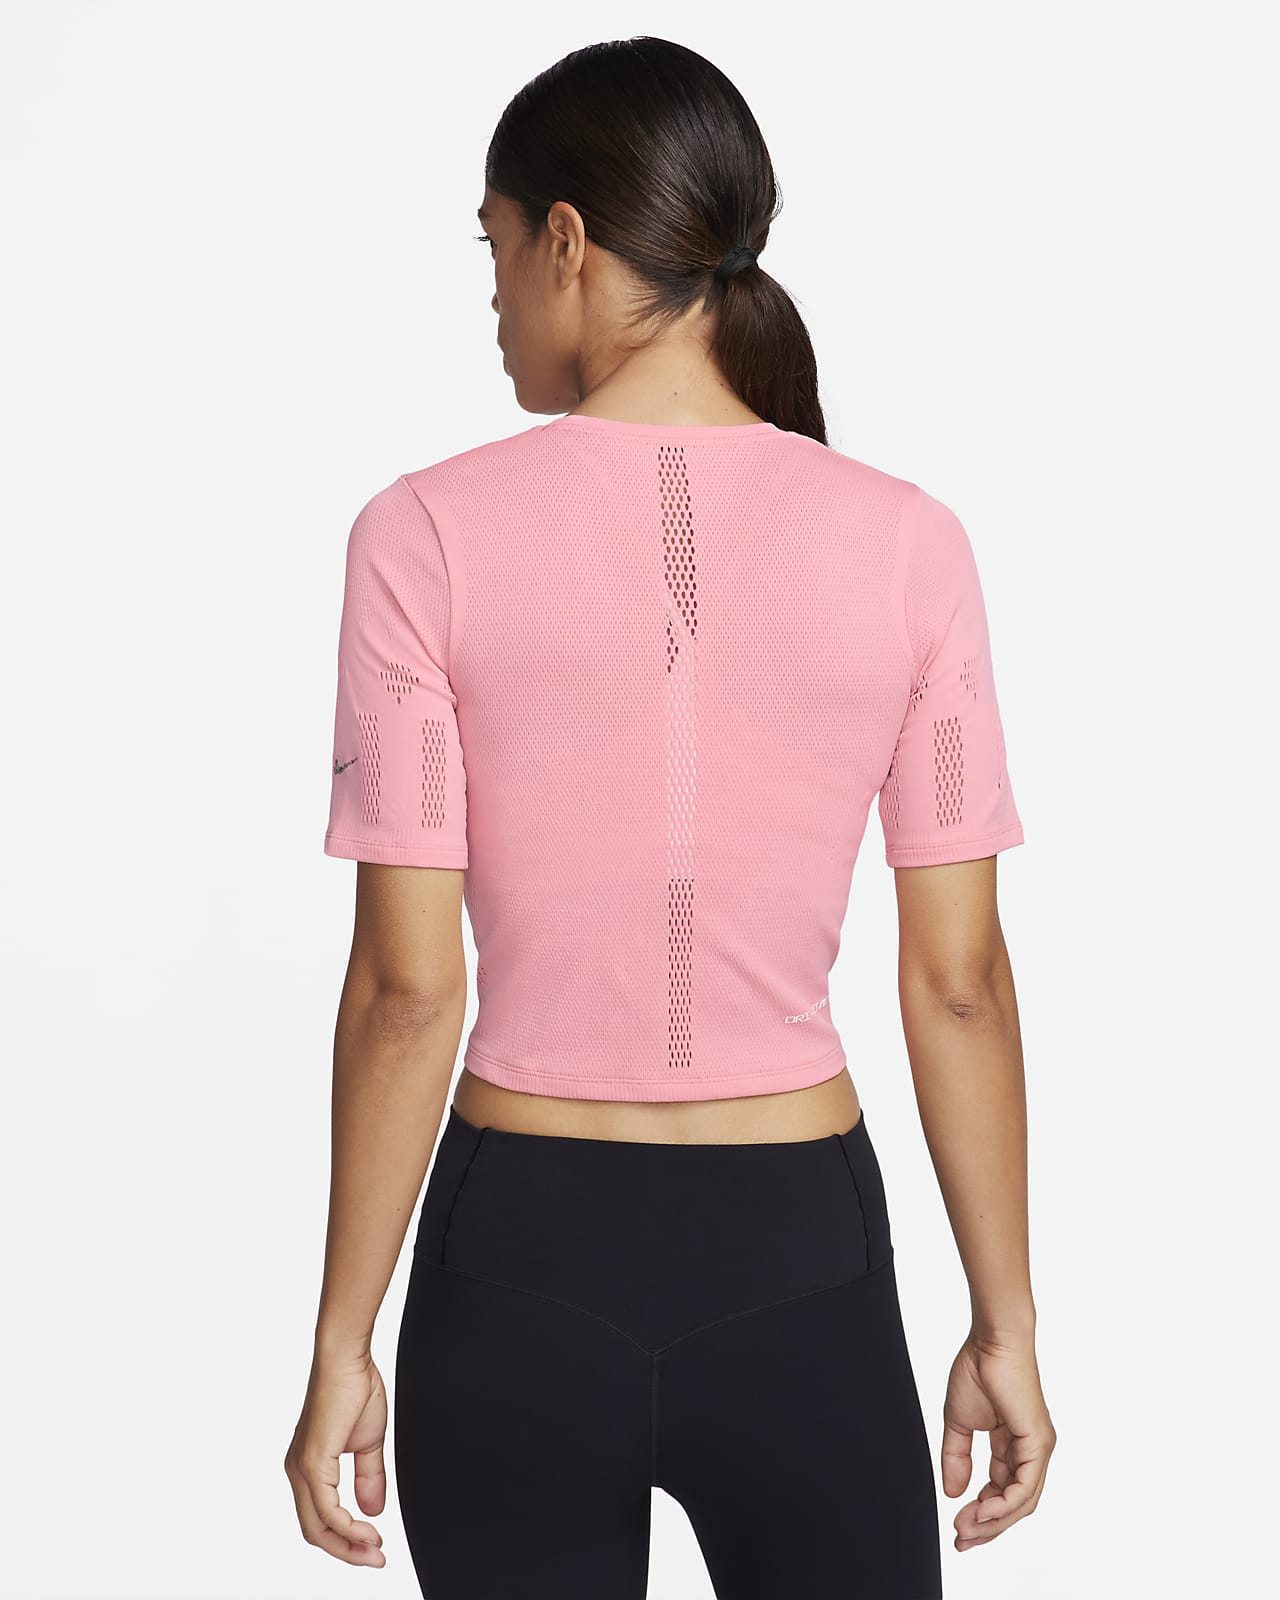 Nike Yoga Dri-FIT ADV Luxe Women's Short-Sleeve Crop Top.